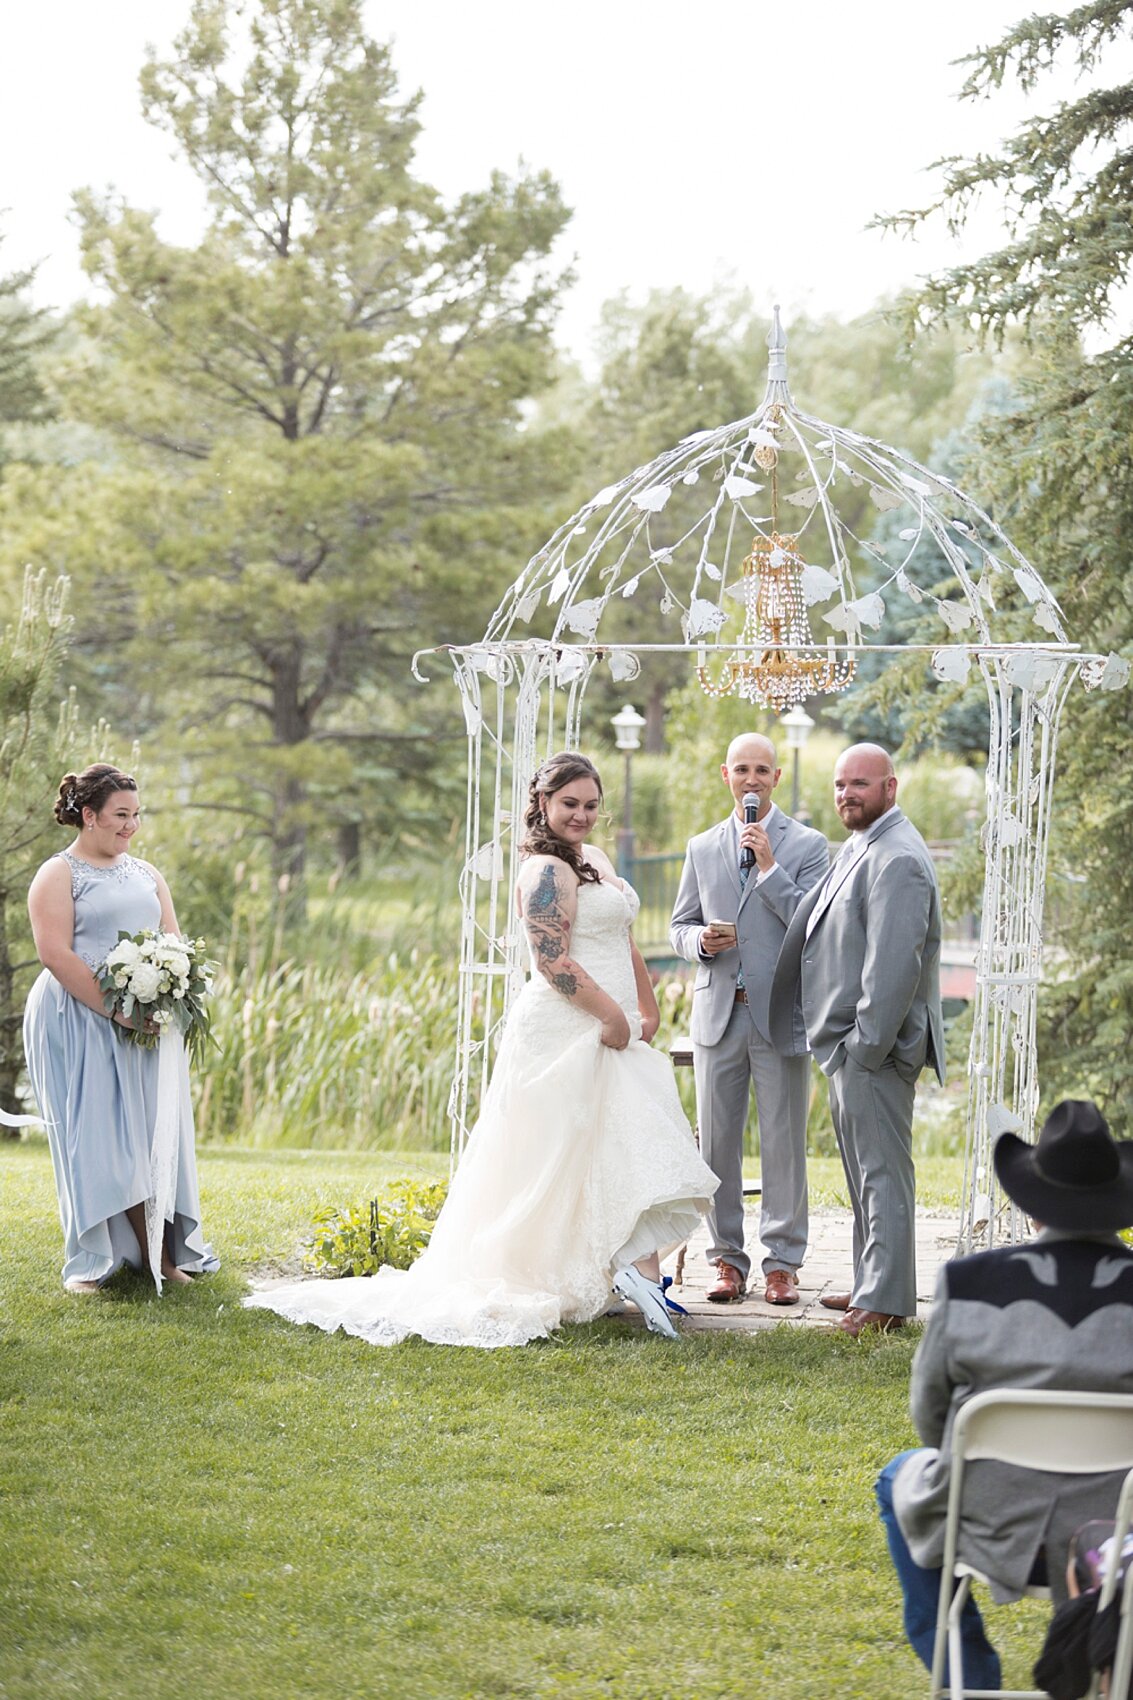 Kristen Vance Photography - Running Creek Manor Wedding - Summer 2018